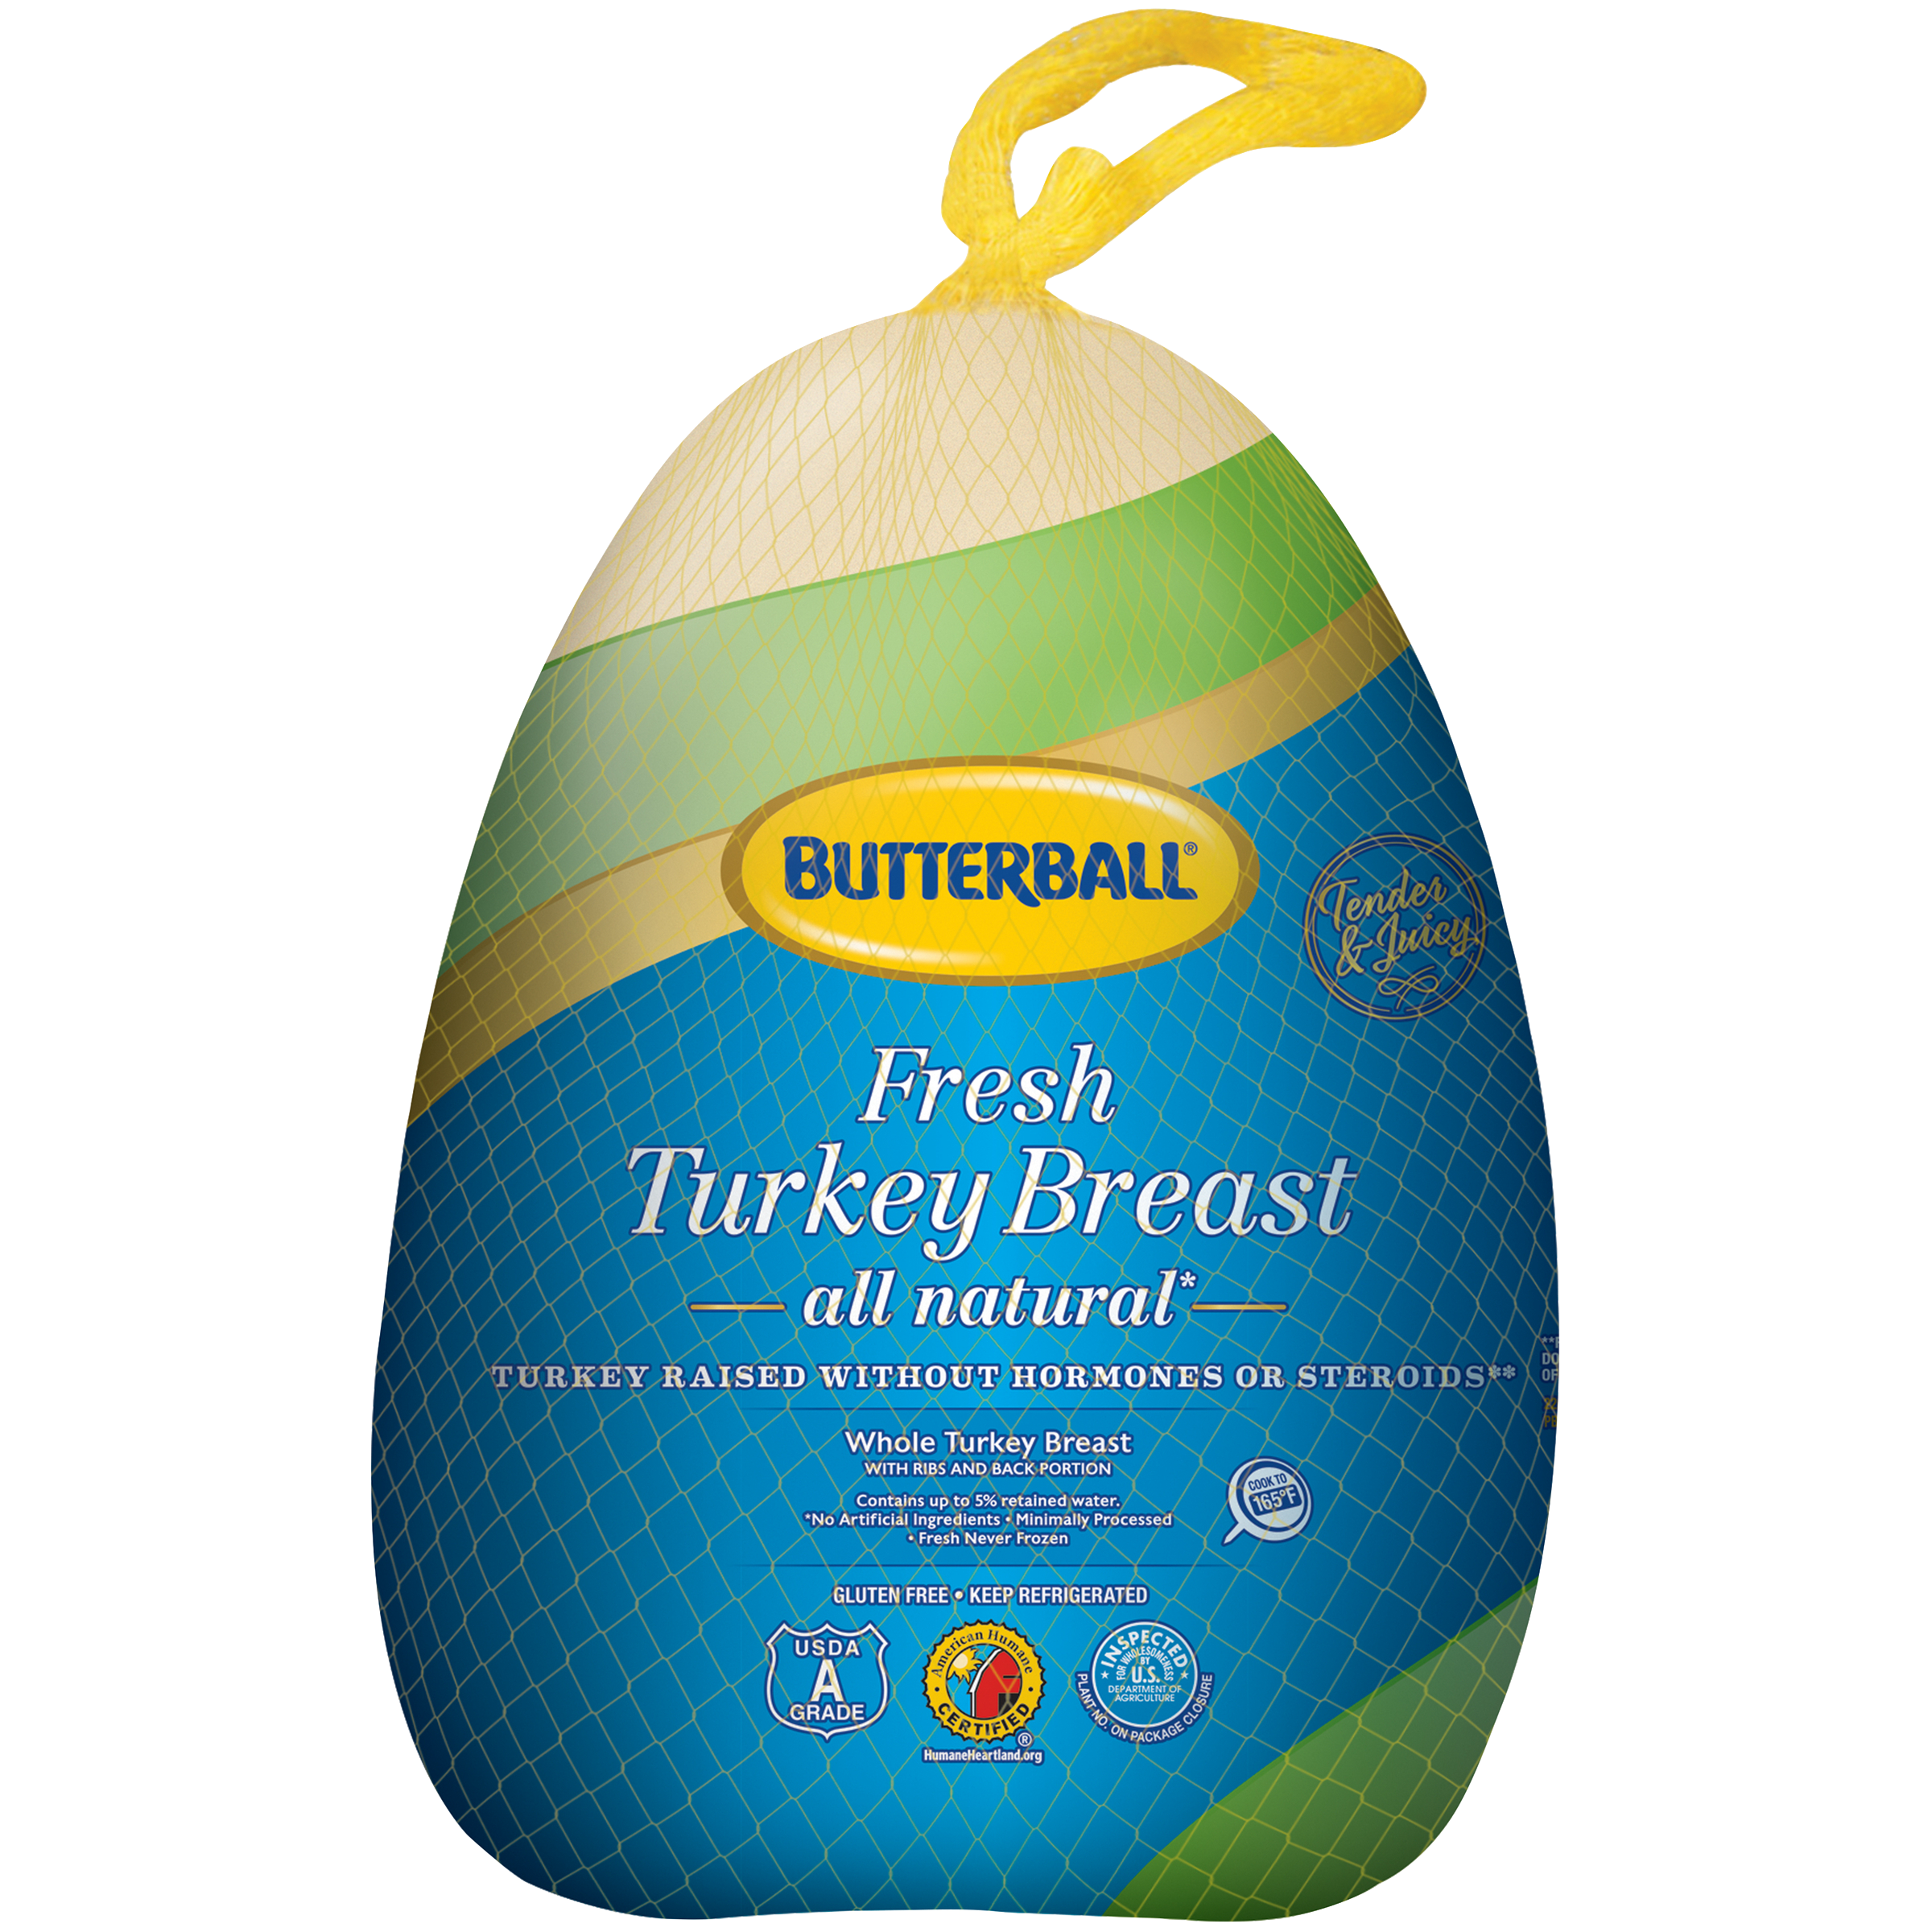 What Is Turkey Breast?